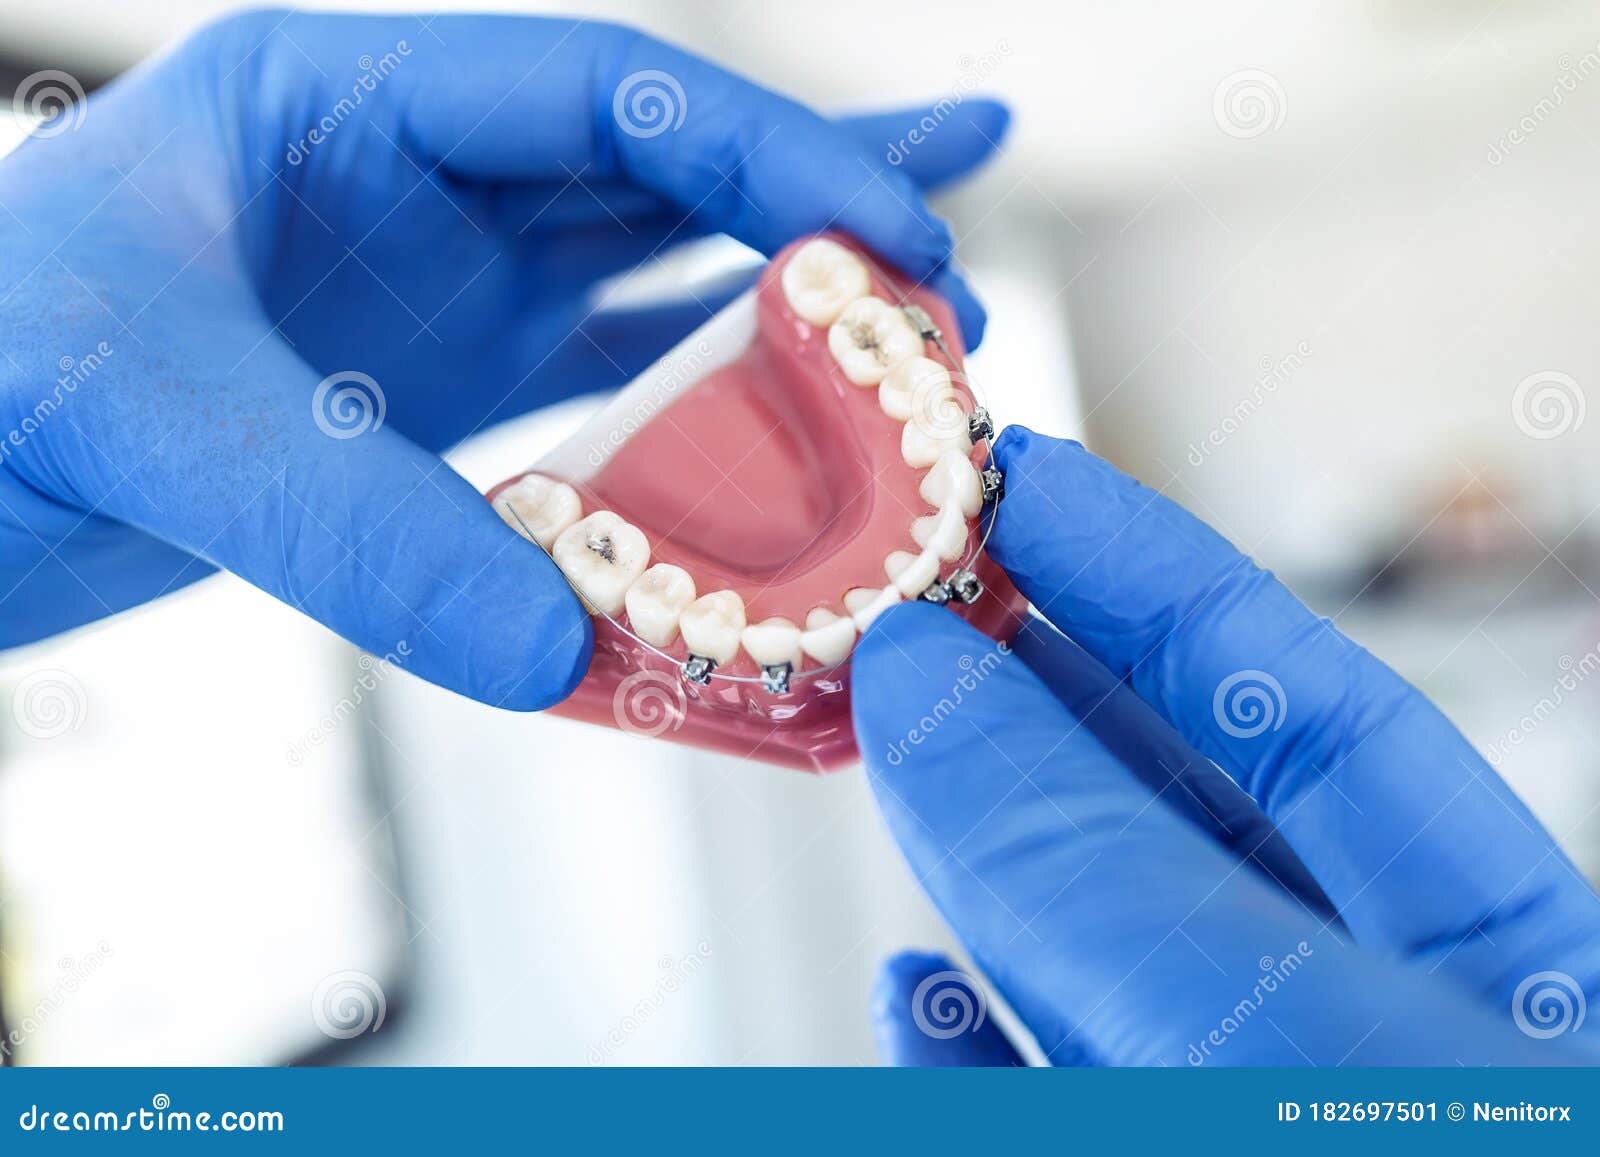 the doctorÃ¢â¬â¢s hands in blue gloves hold an artificial model of the jaw with breaks. the dentist shows an example of tooth